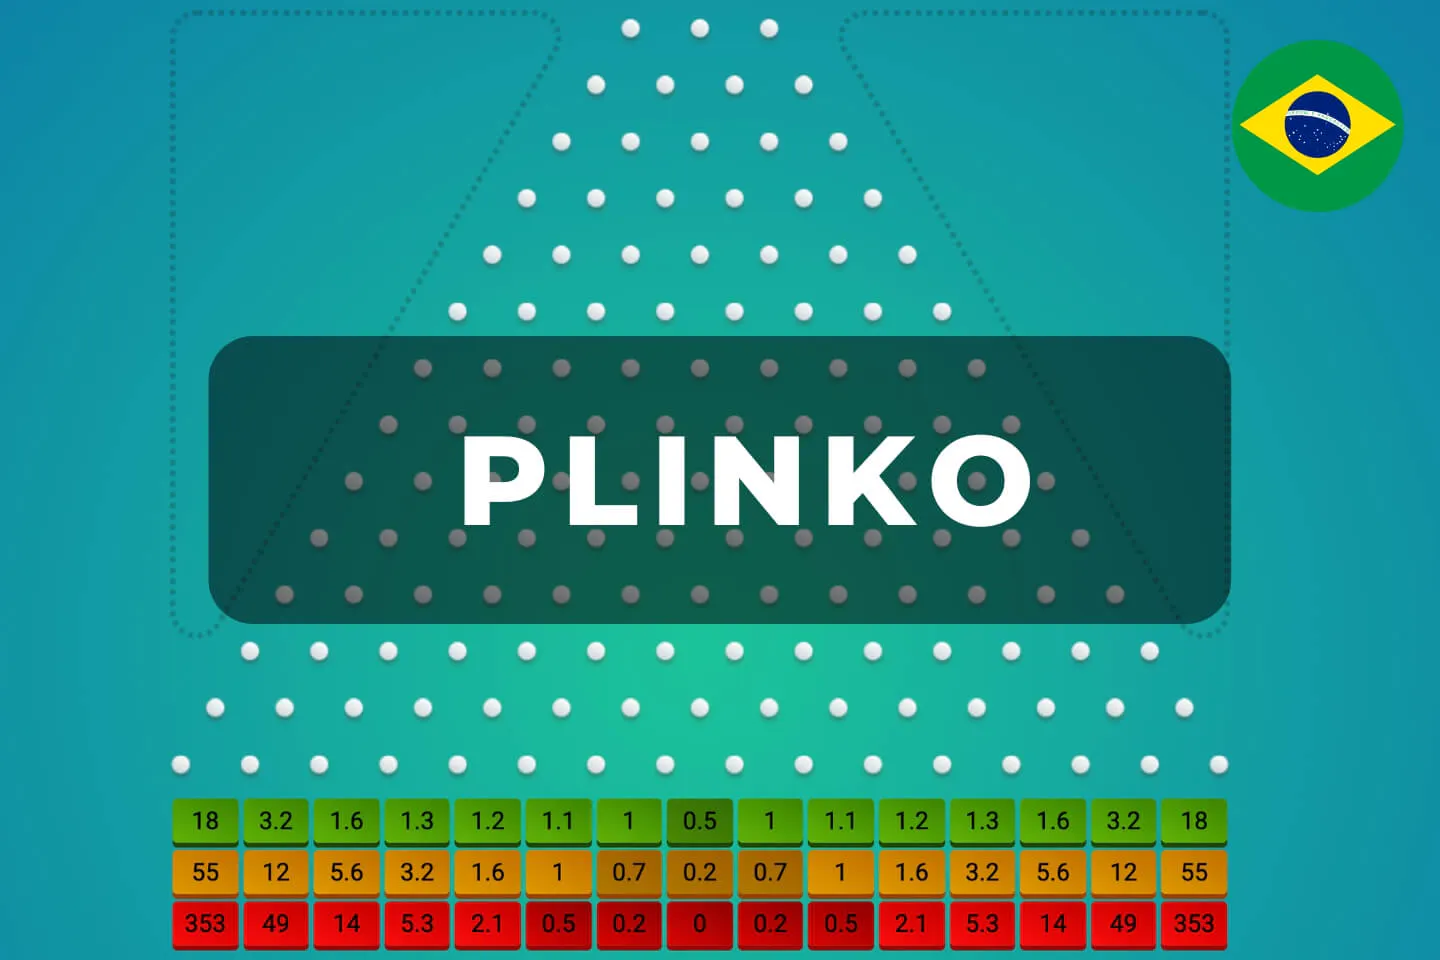 Conheça tudo sobre o Plinko e aprenda como jogar!